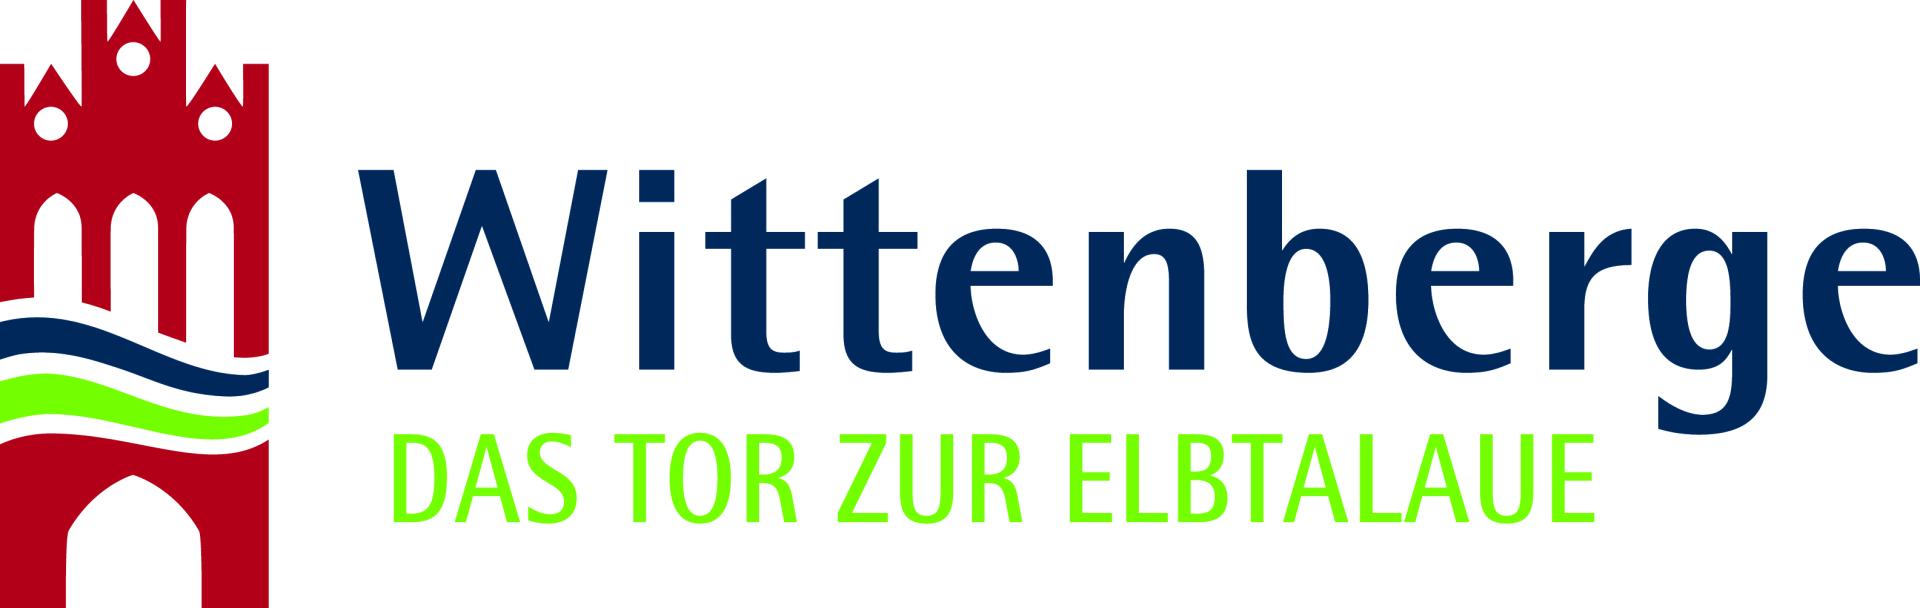 Logo Wittenberge